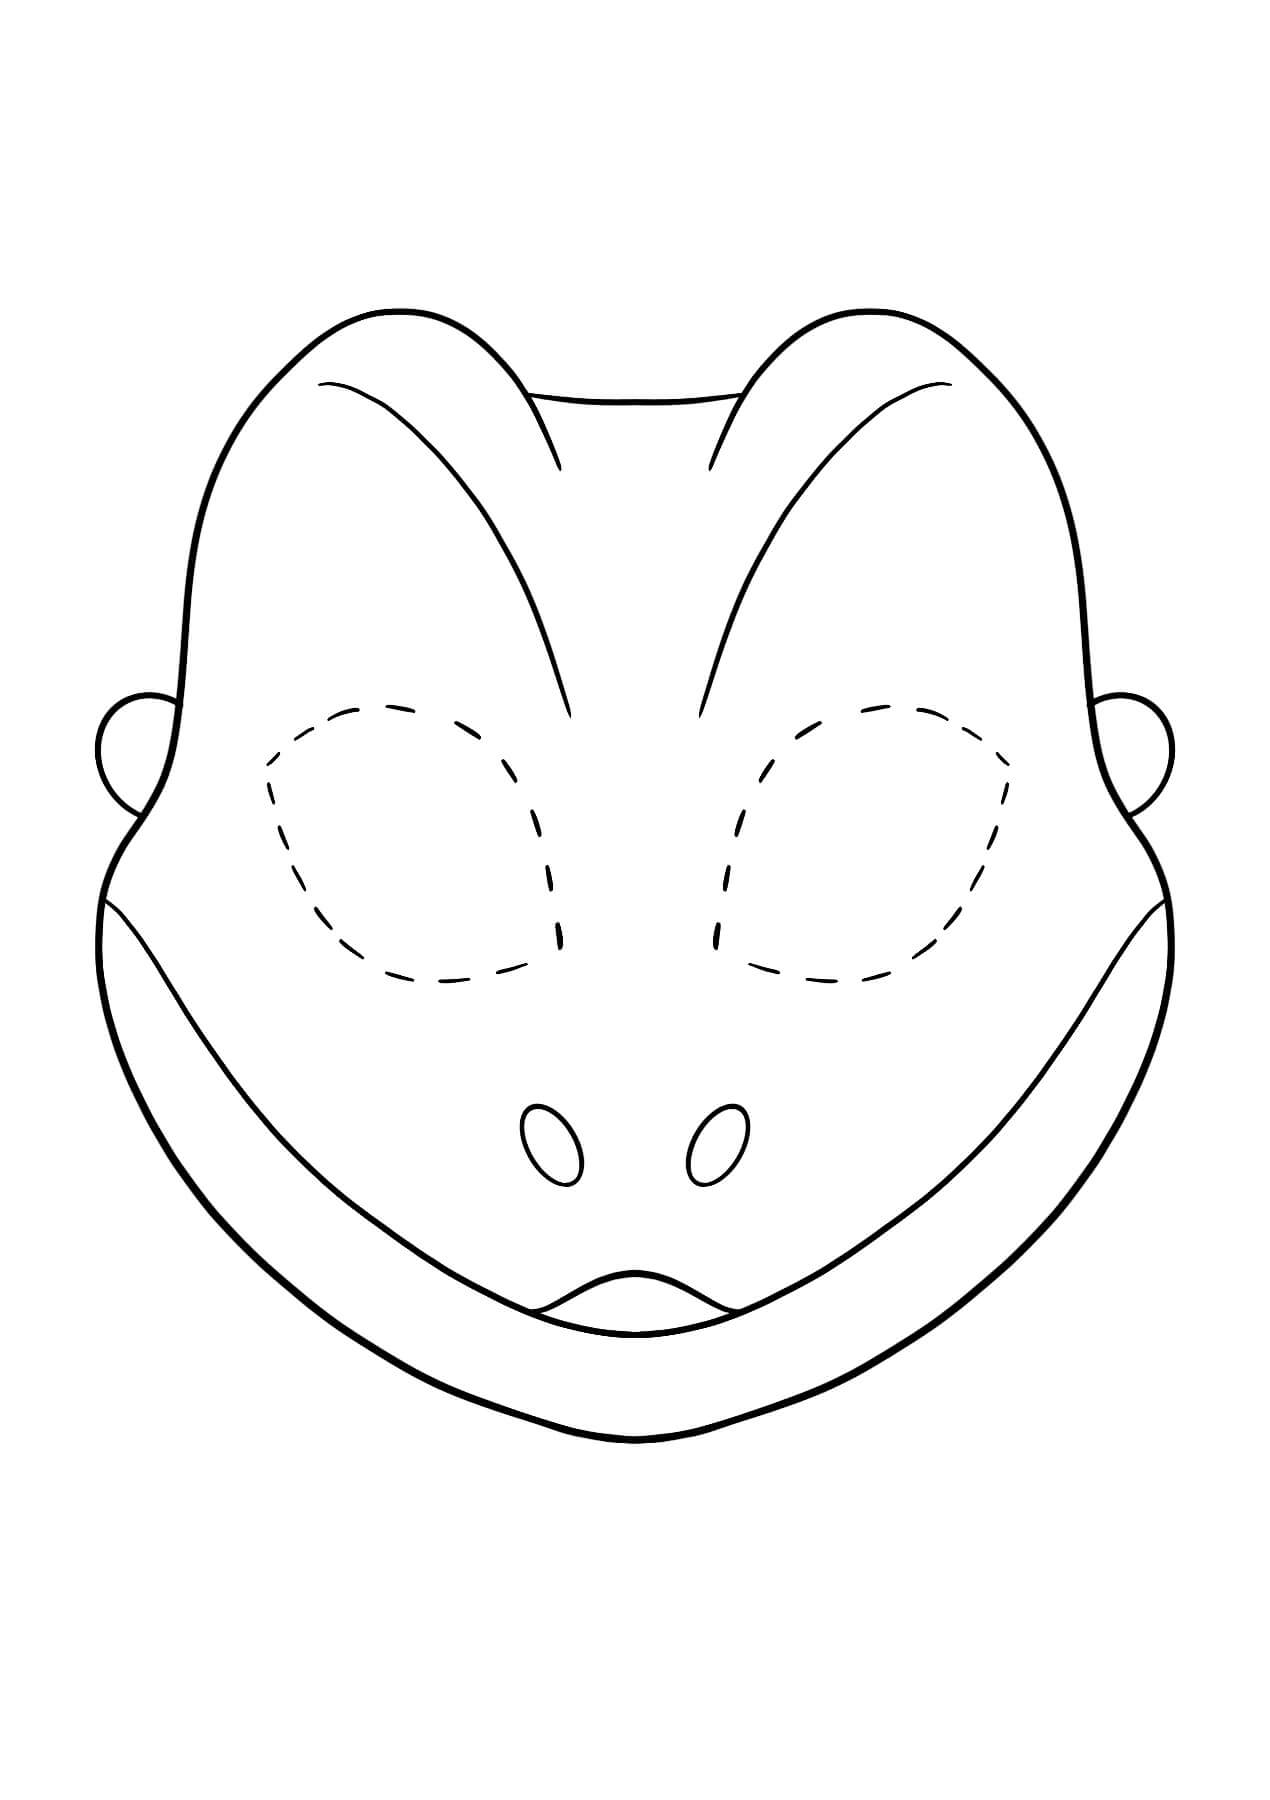 Masque de Lézard coloring page